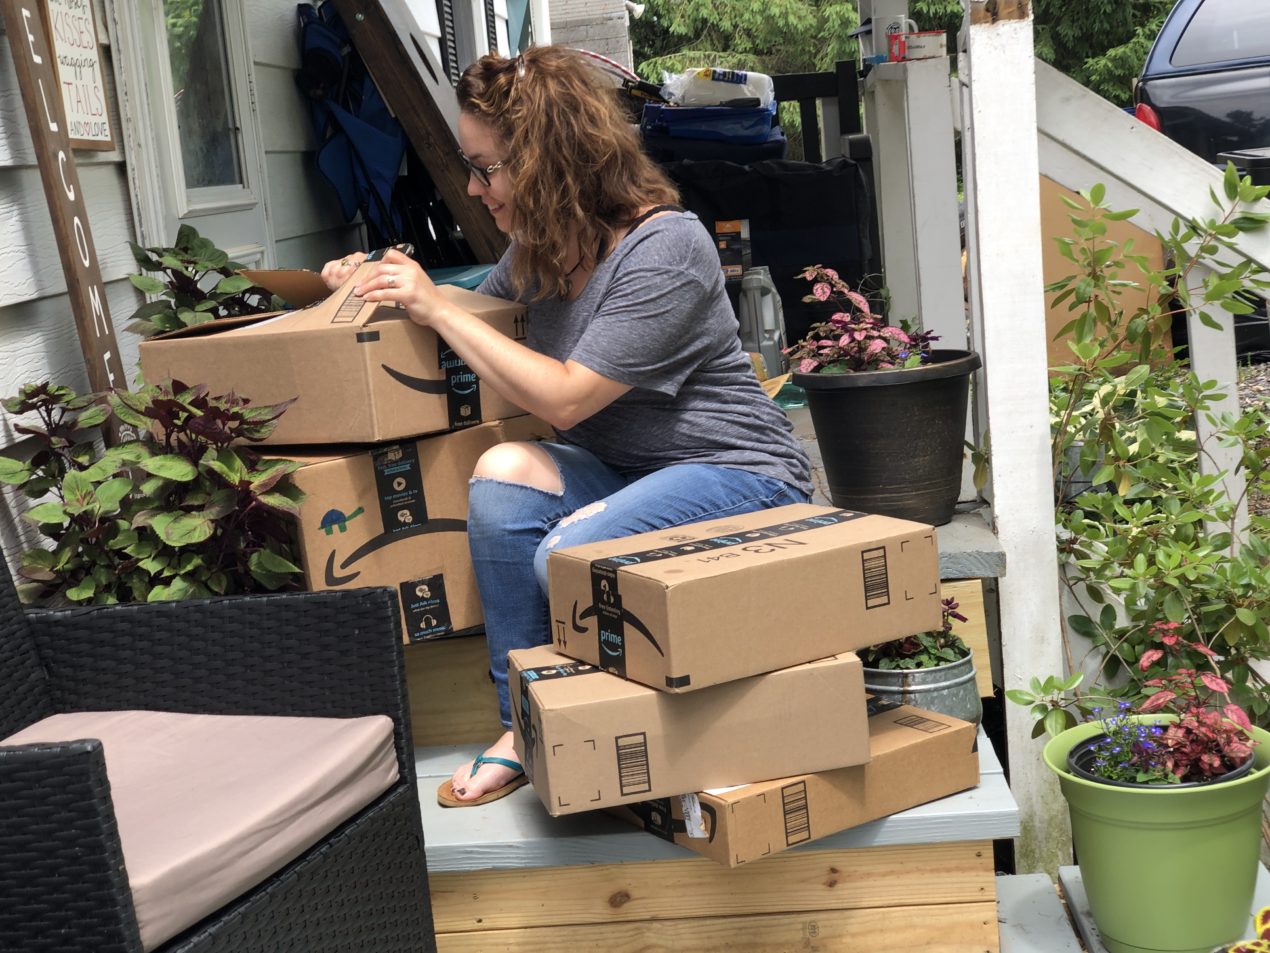 Kristy Amazon Boxes on Porch